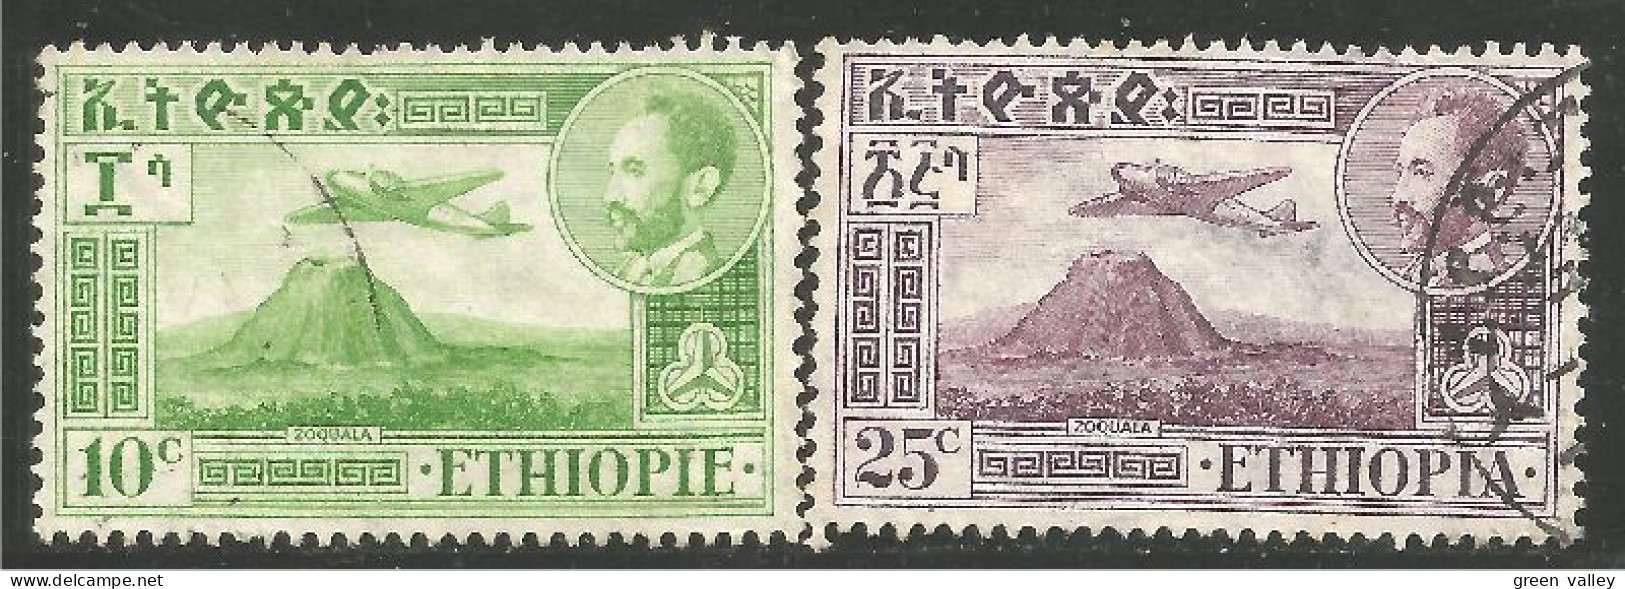 324 Ethiopie 1947 Volcan Zoquala Volcano (ETH-289) - Volcanos